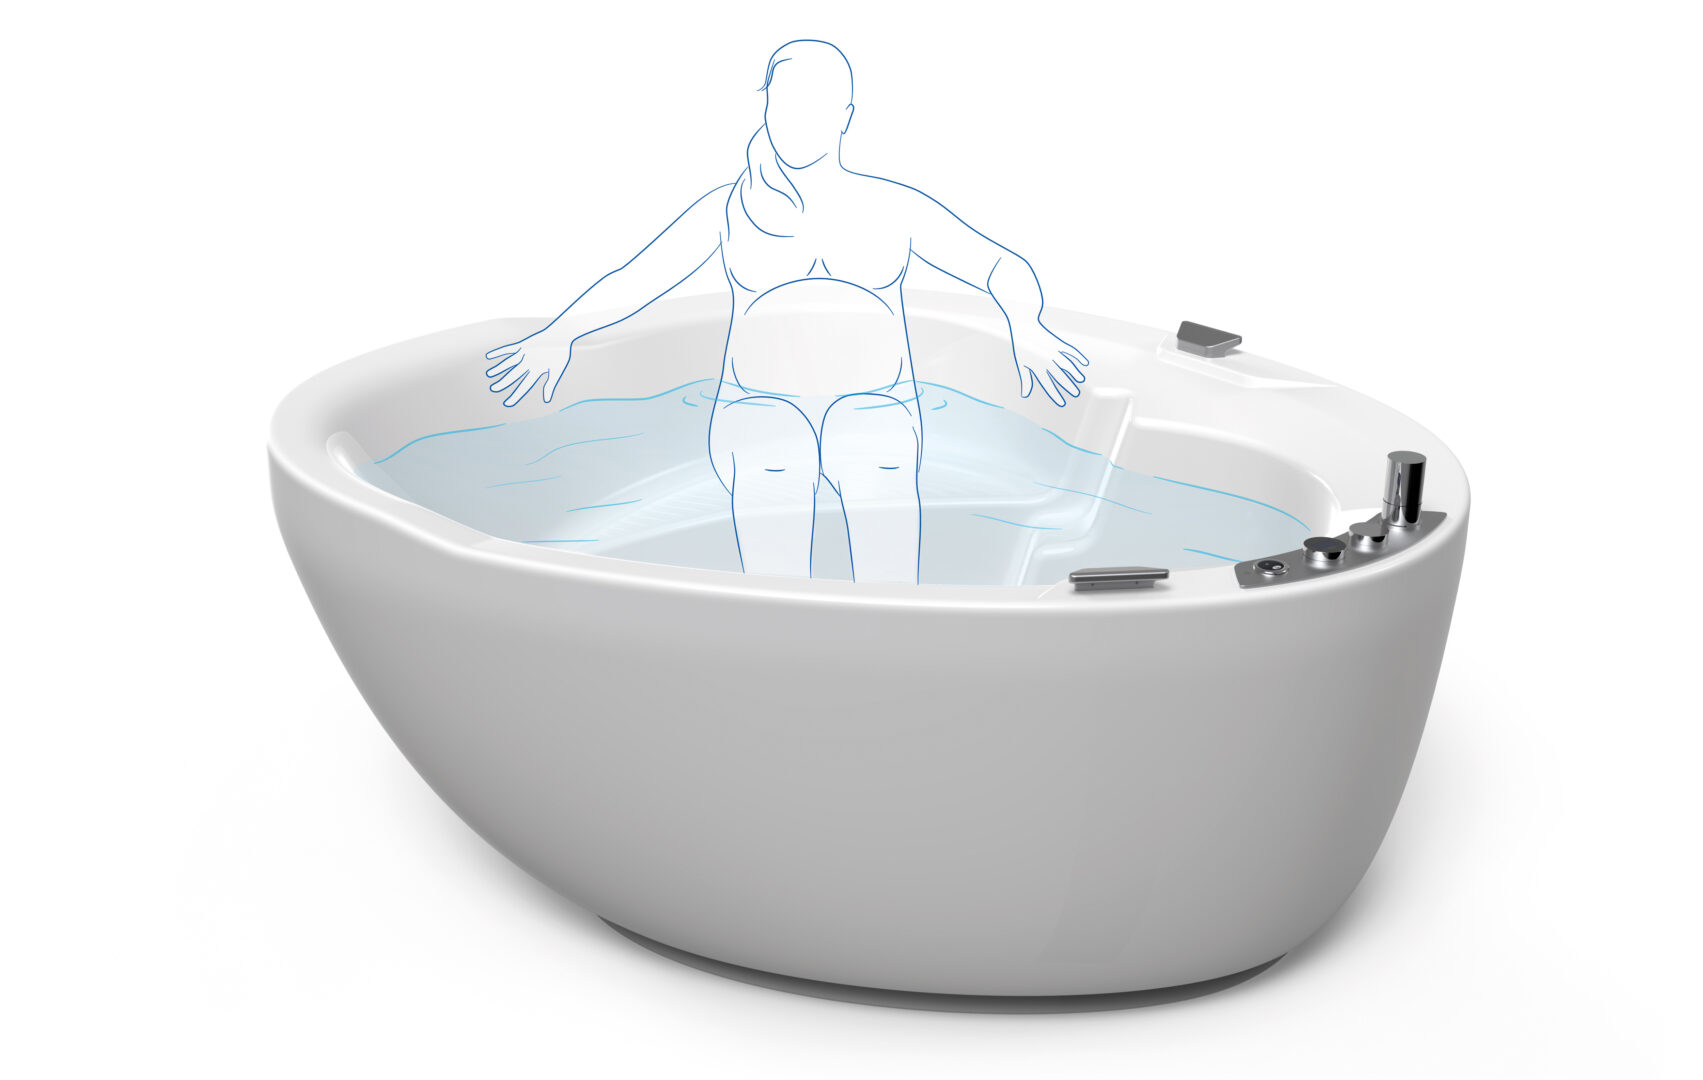 La Bassine Professional Croyde Medical • Inflatable birth pool for